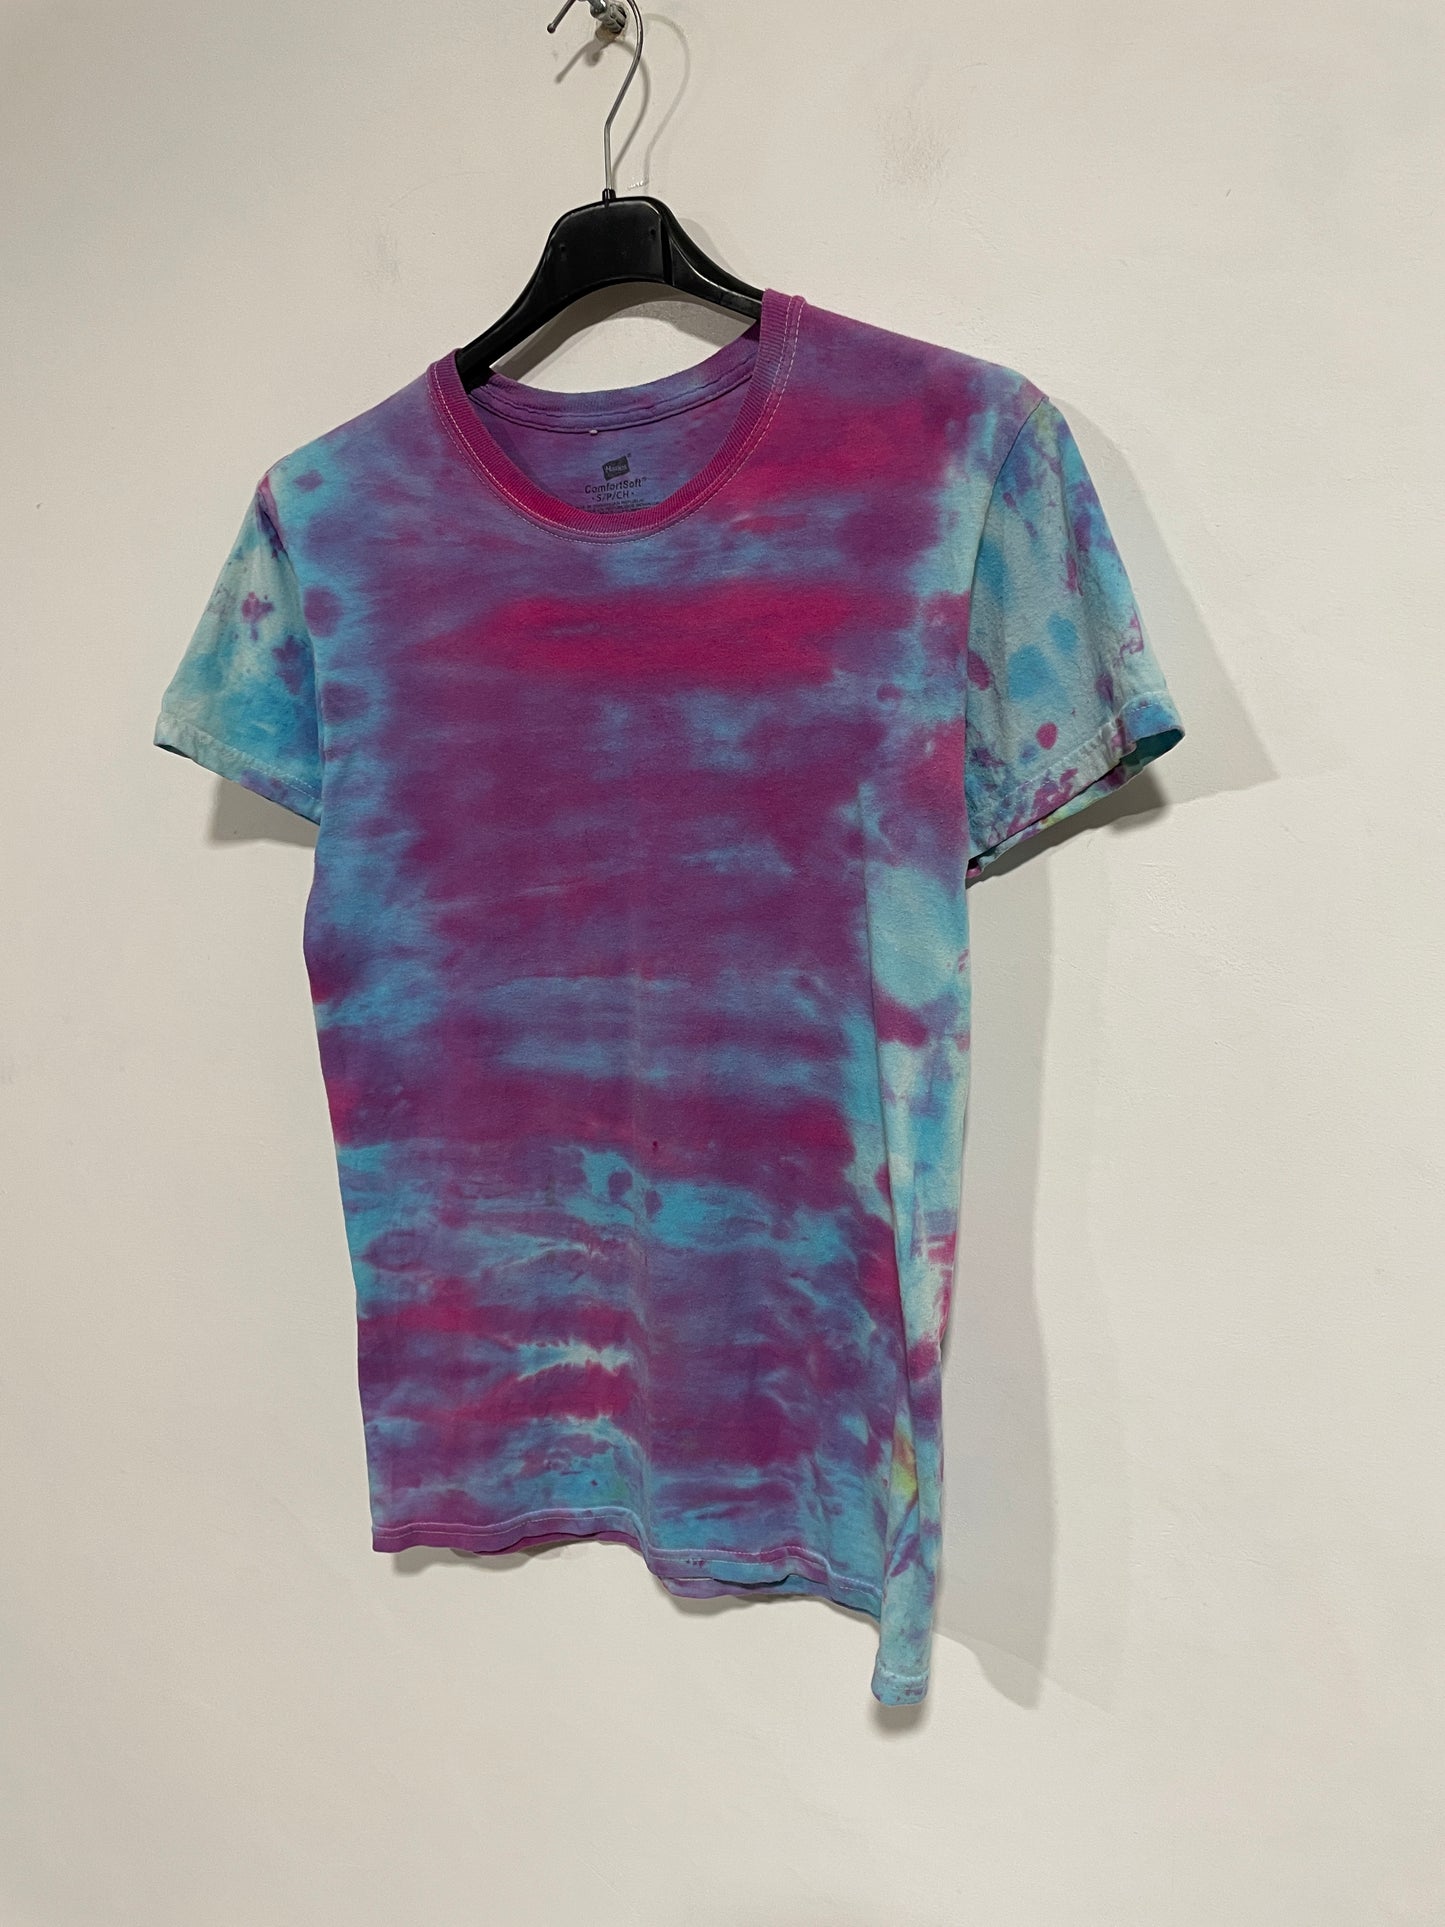 T shirt tie dye (MR219)